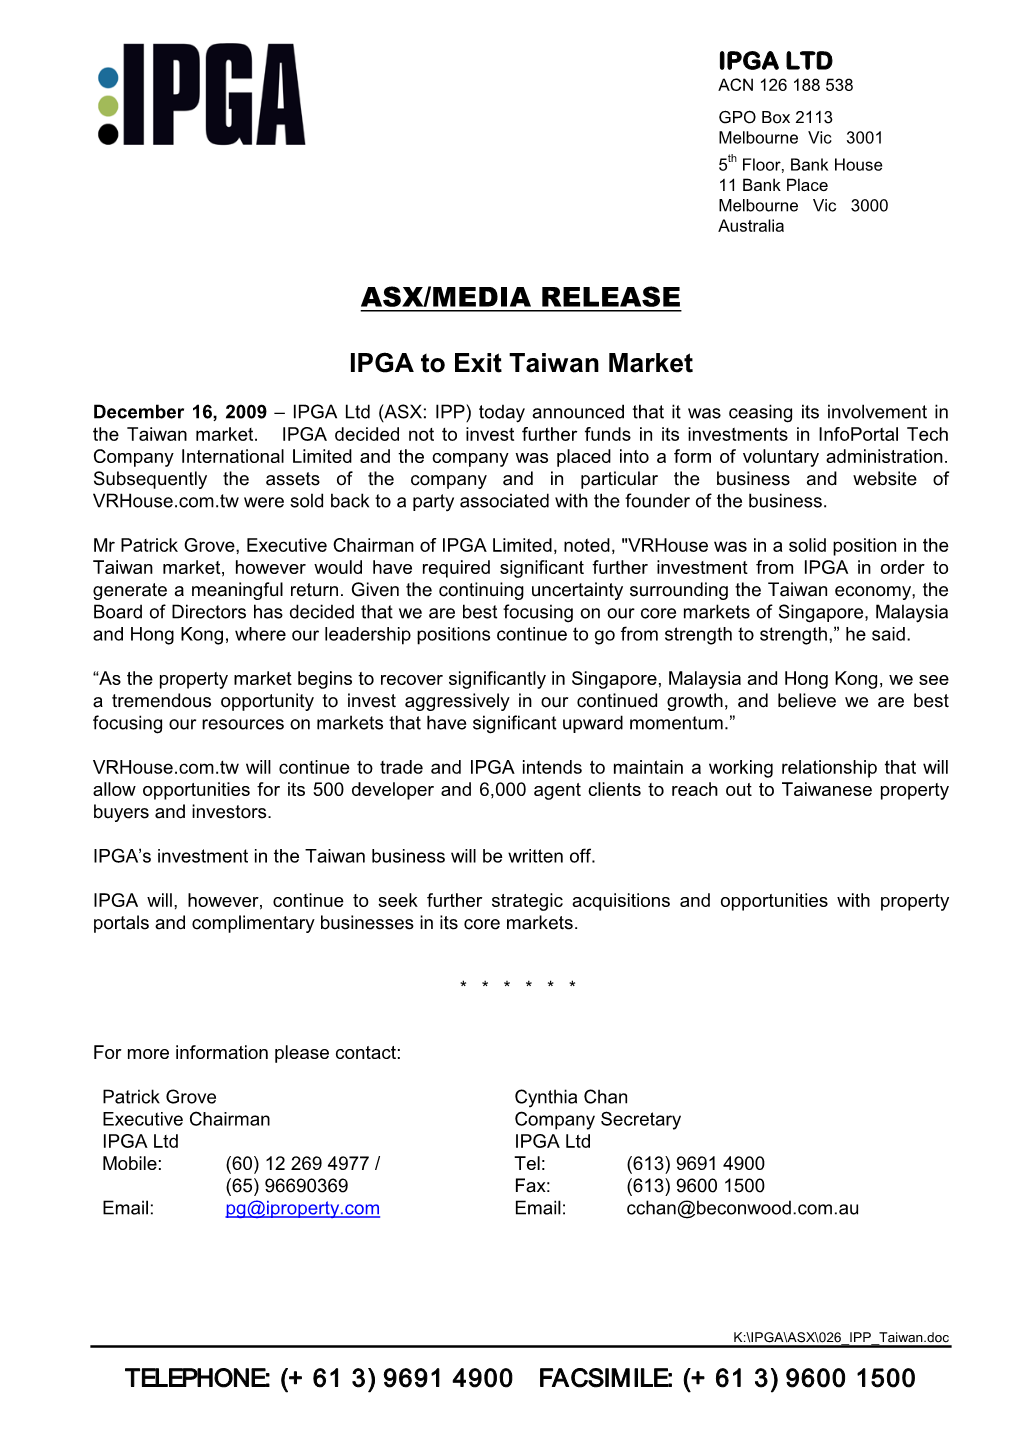 ASX/MEDIA RELEASE IPGA to Exit Taiwan Market